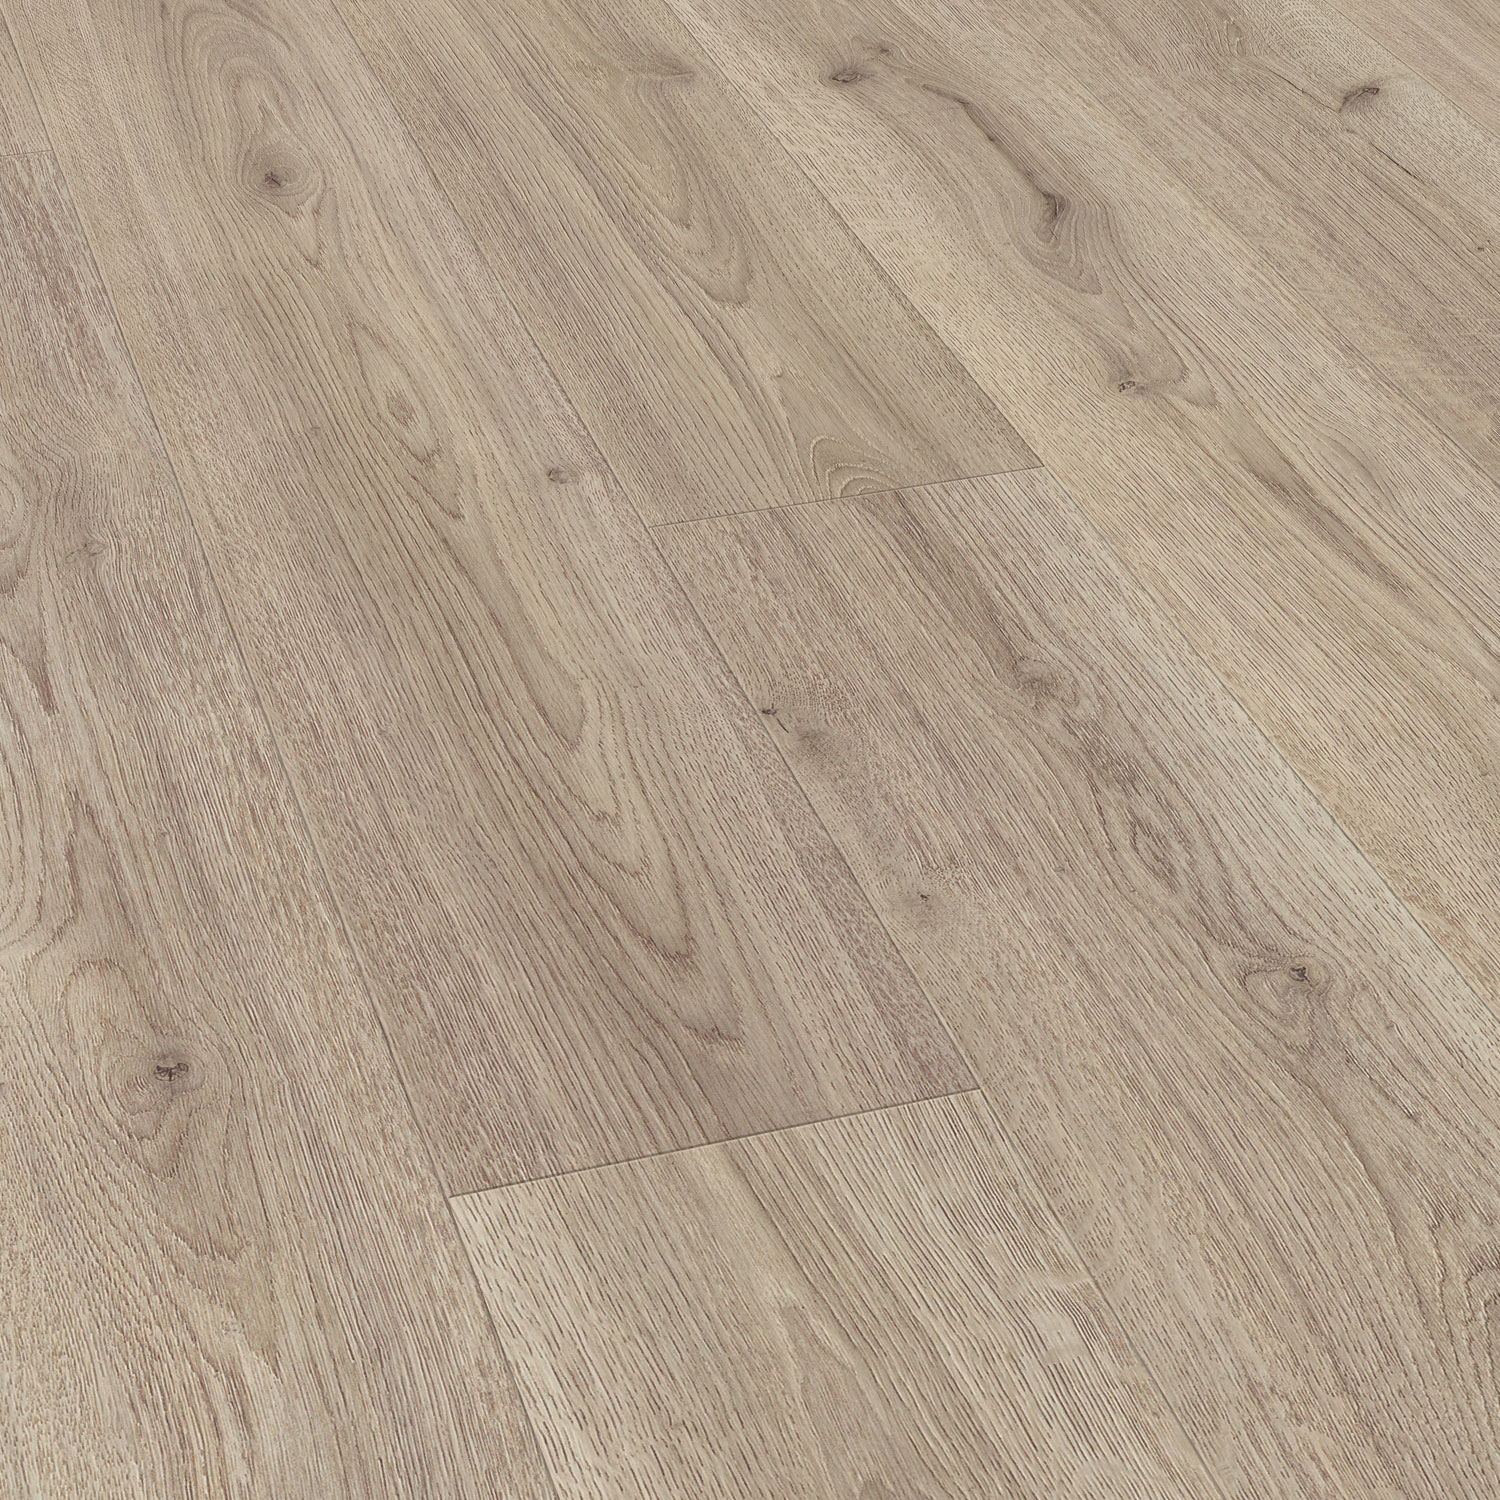 Tegola Warm Oak Grey Laminate Carpetright, Warm Laminate Flooring